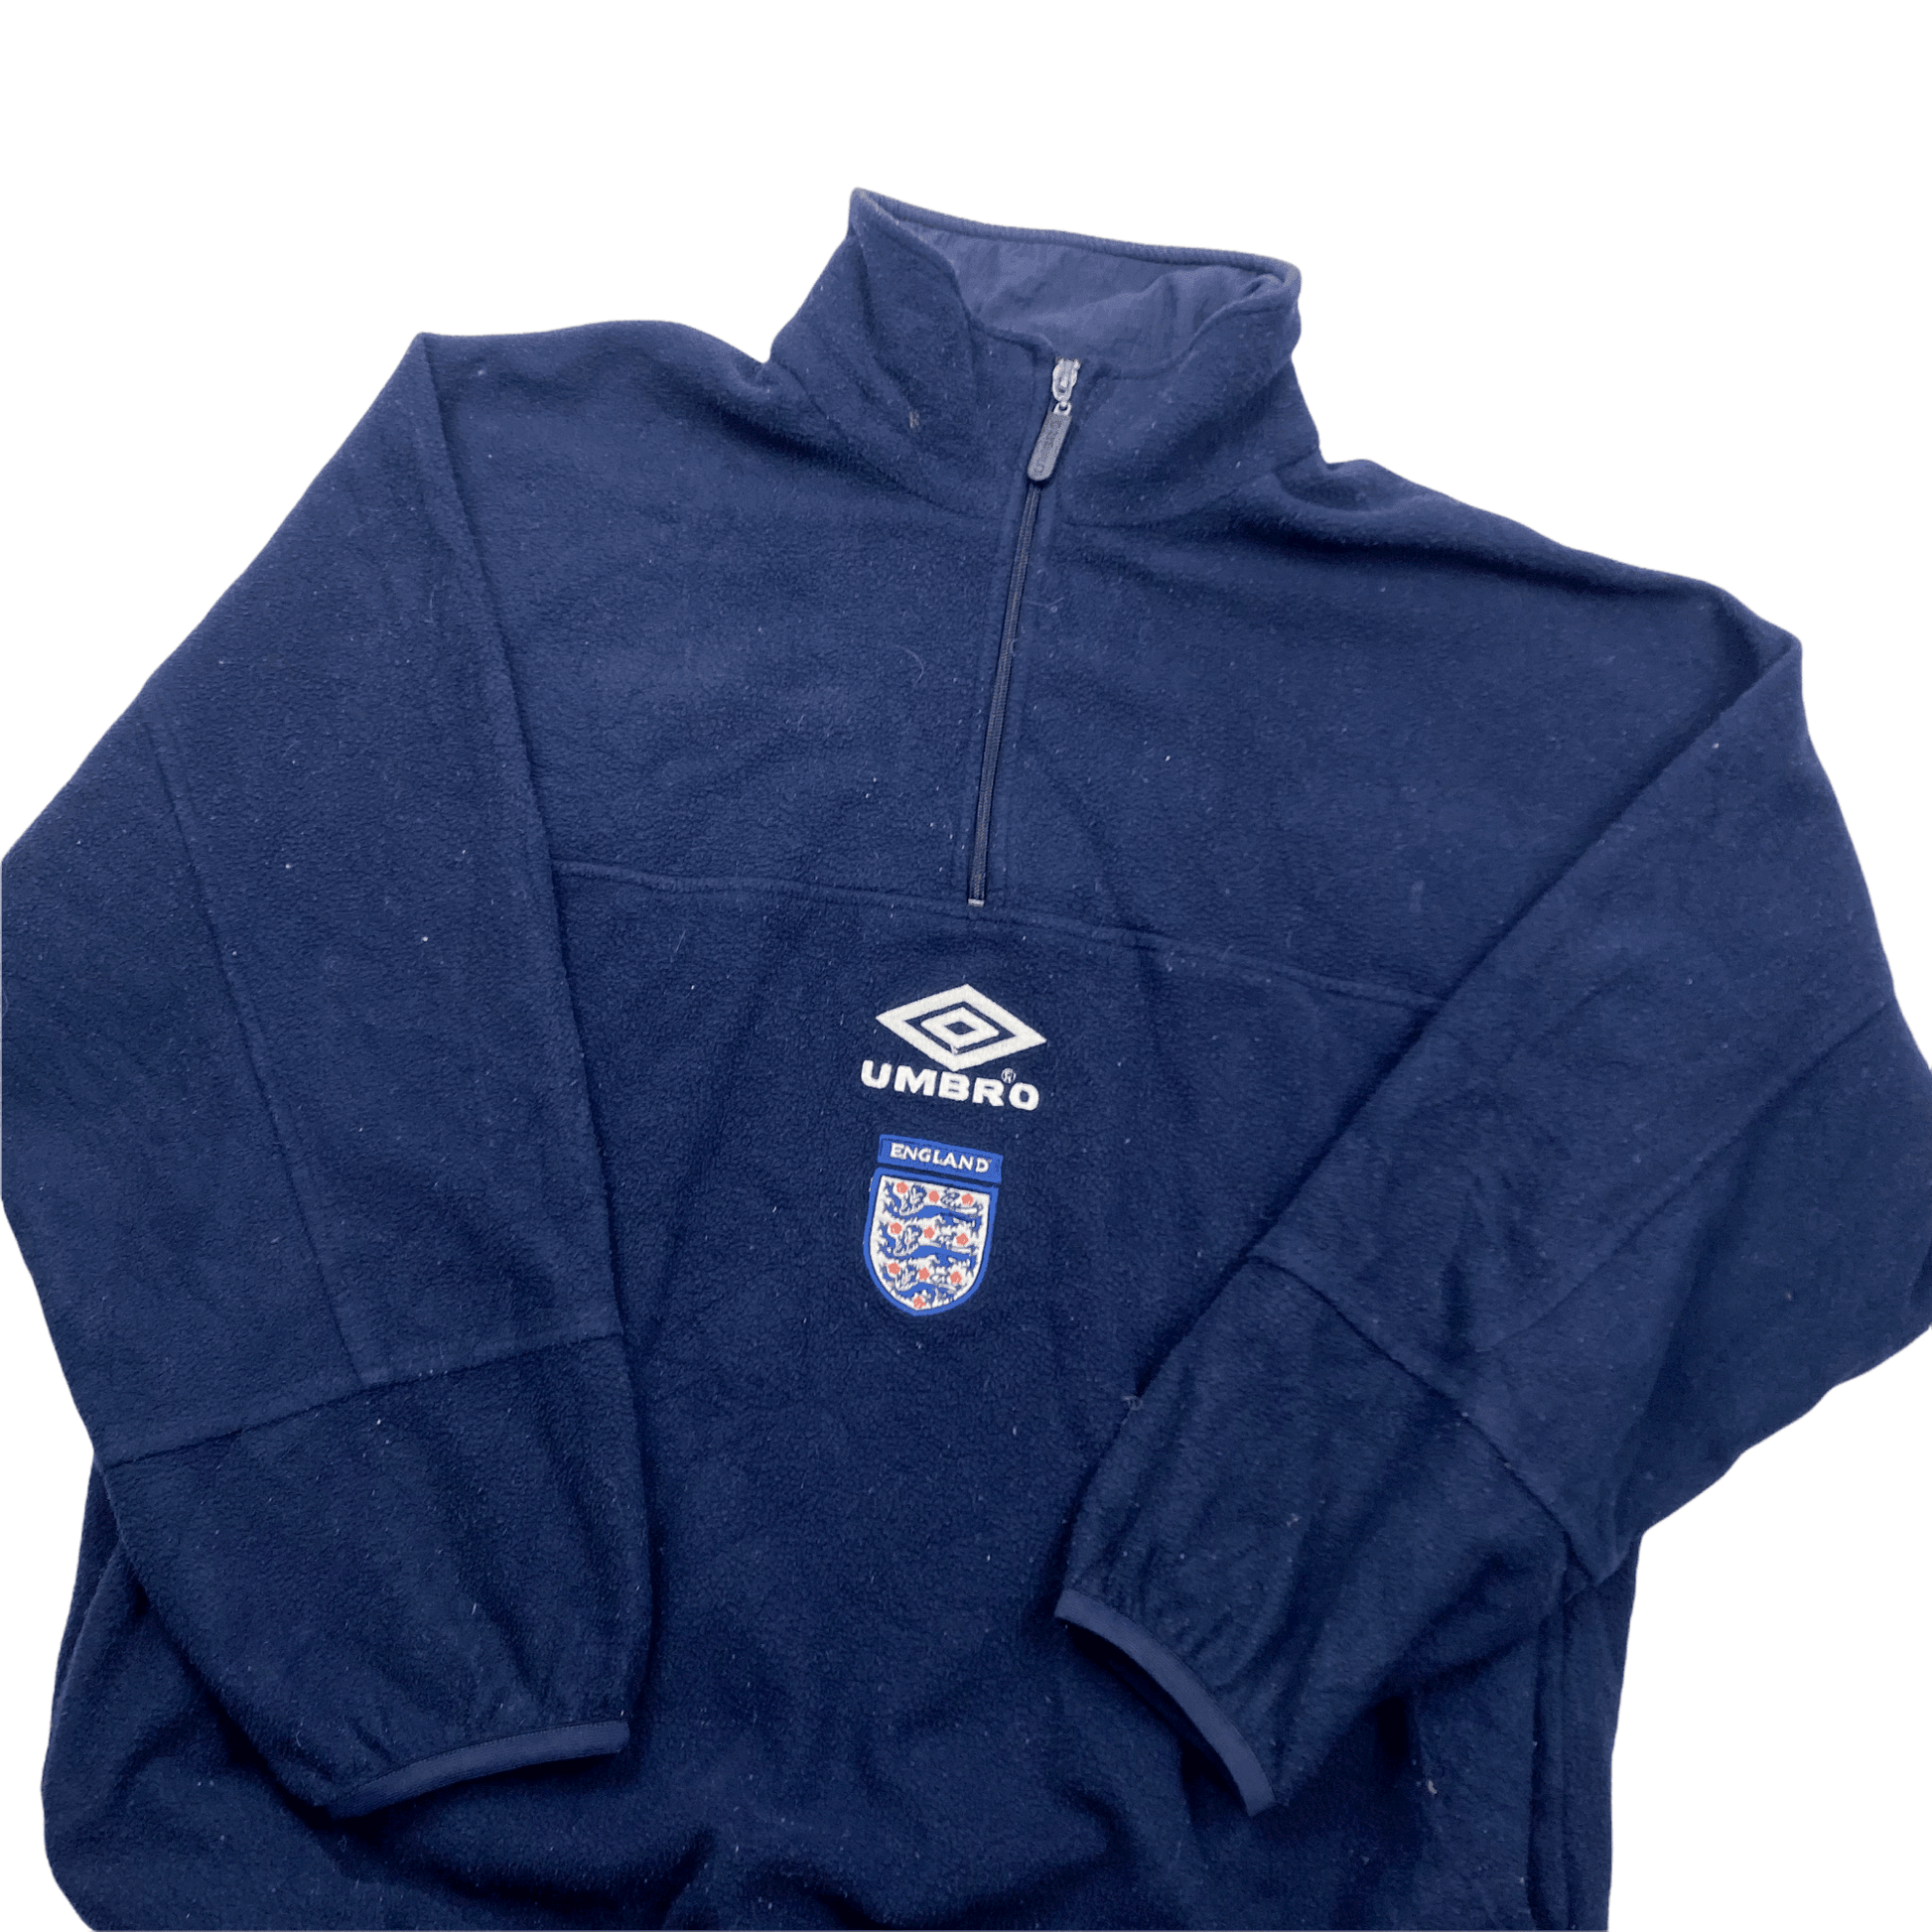 Vintage 90s Navy Blue Umbro England Football Quarter Zip Fleece - Large - The Streetwear Studio